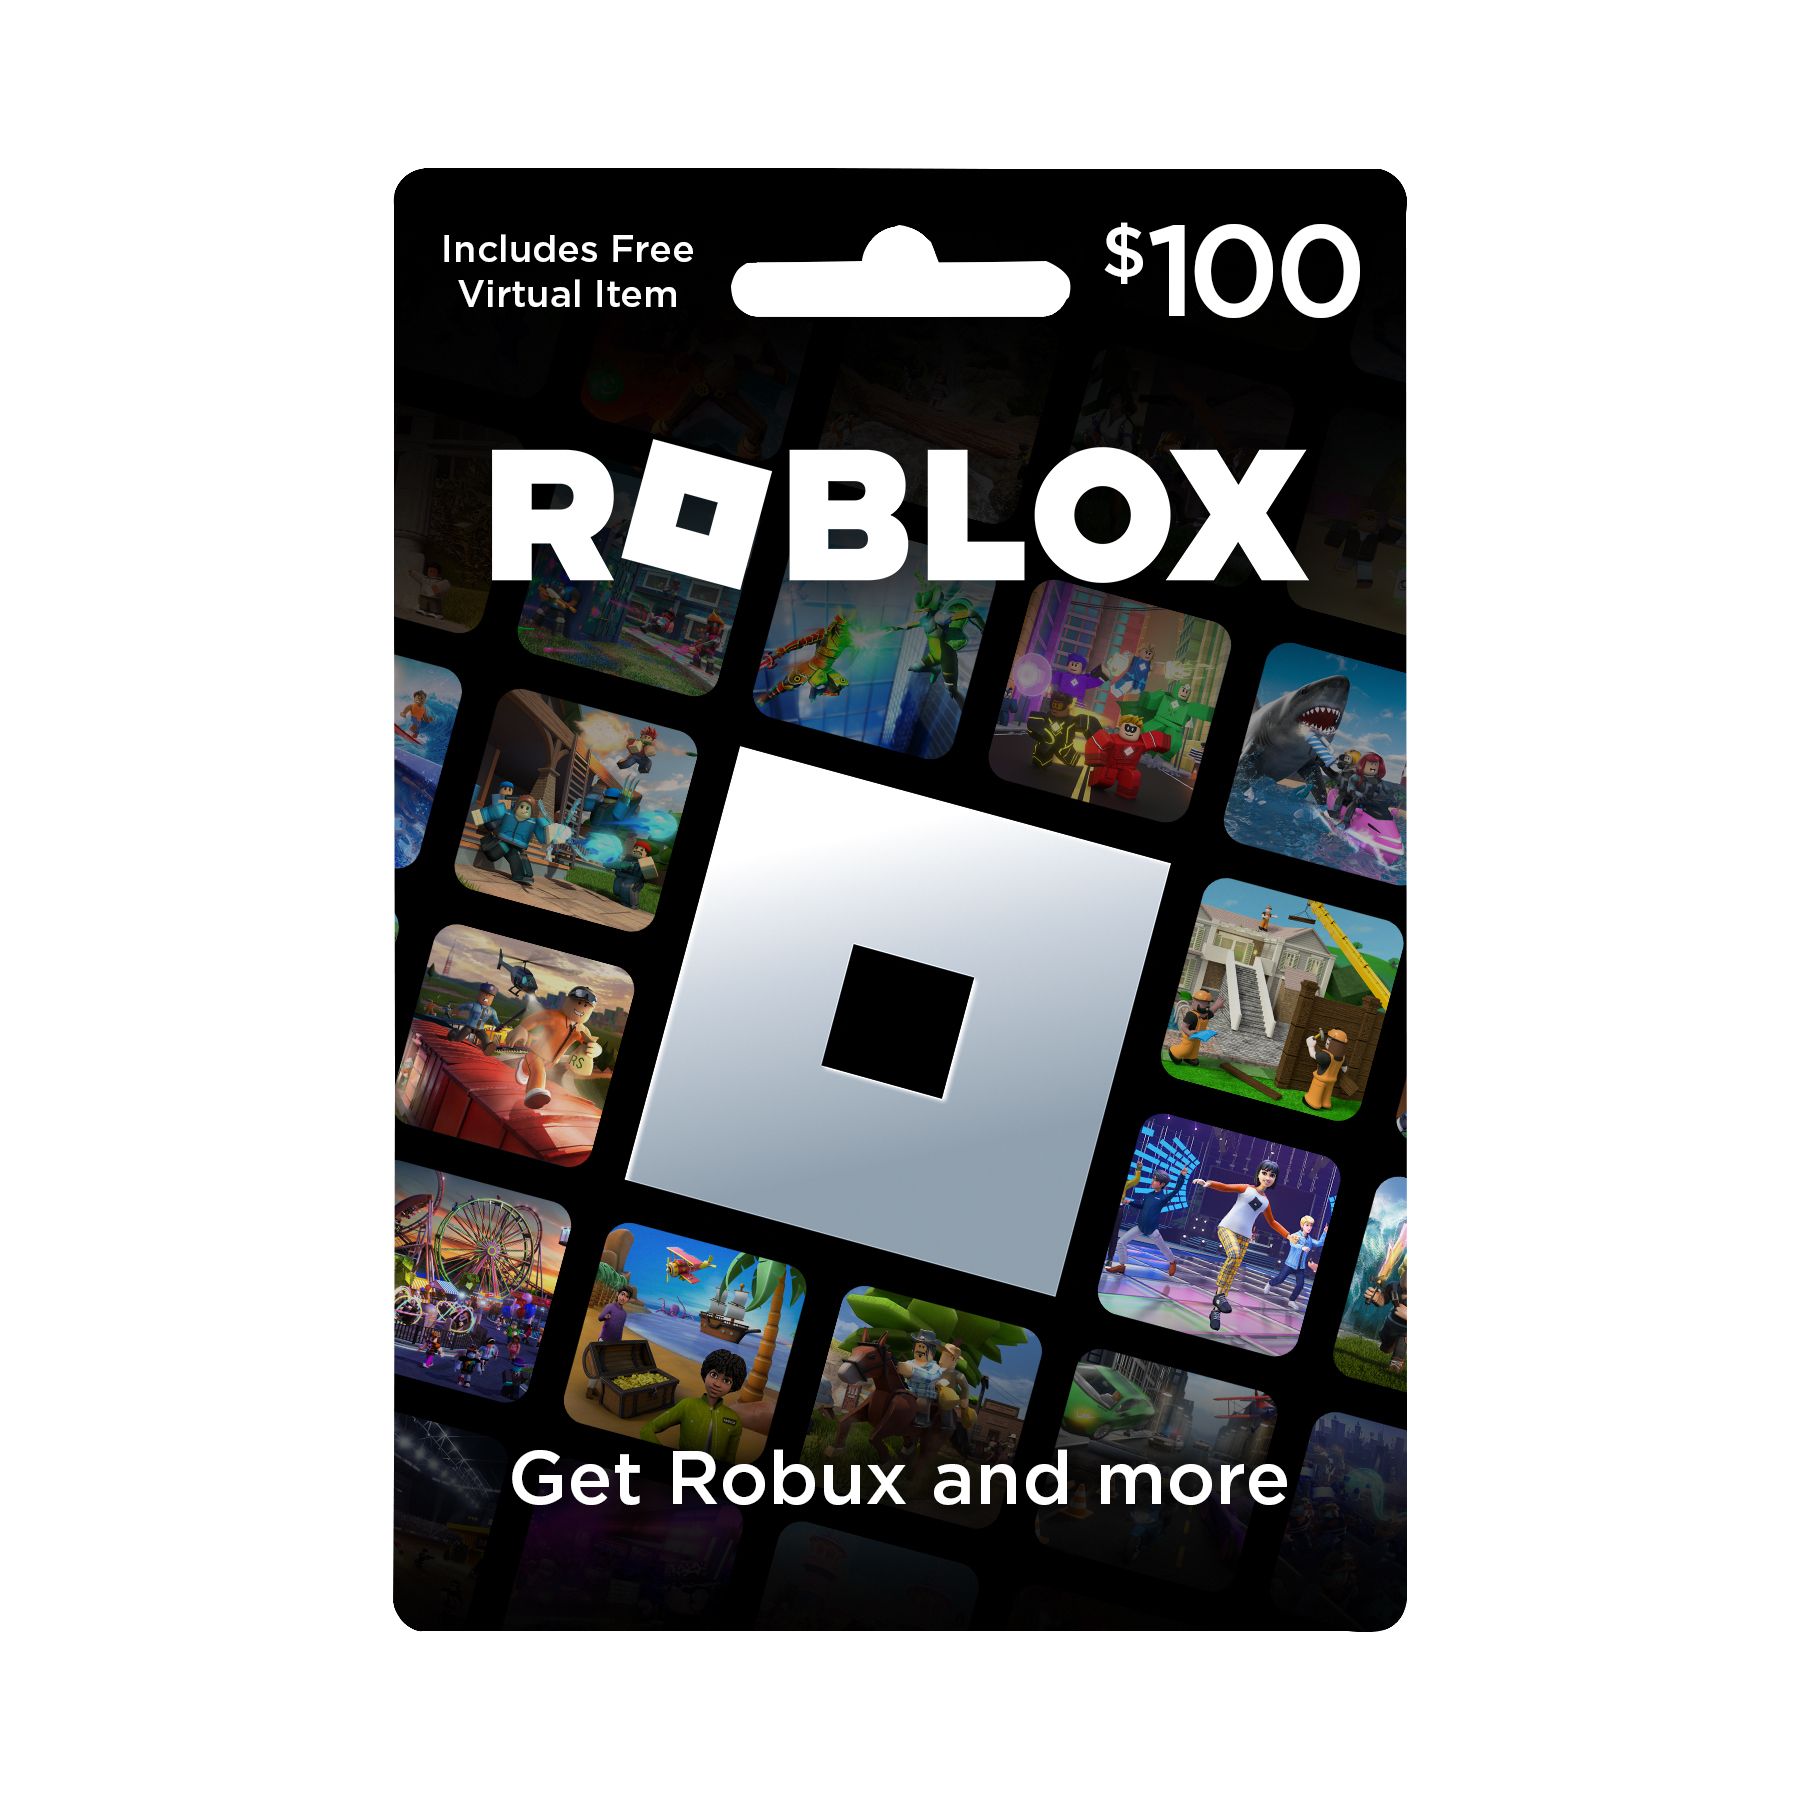 5 Ways To Get Free Robux